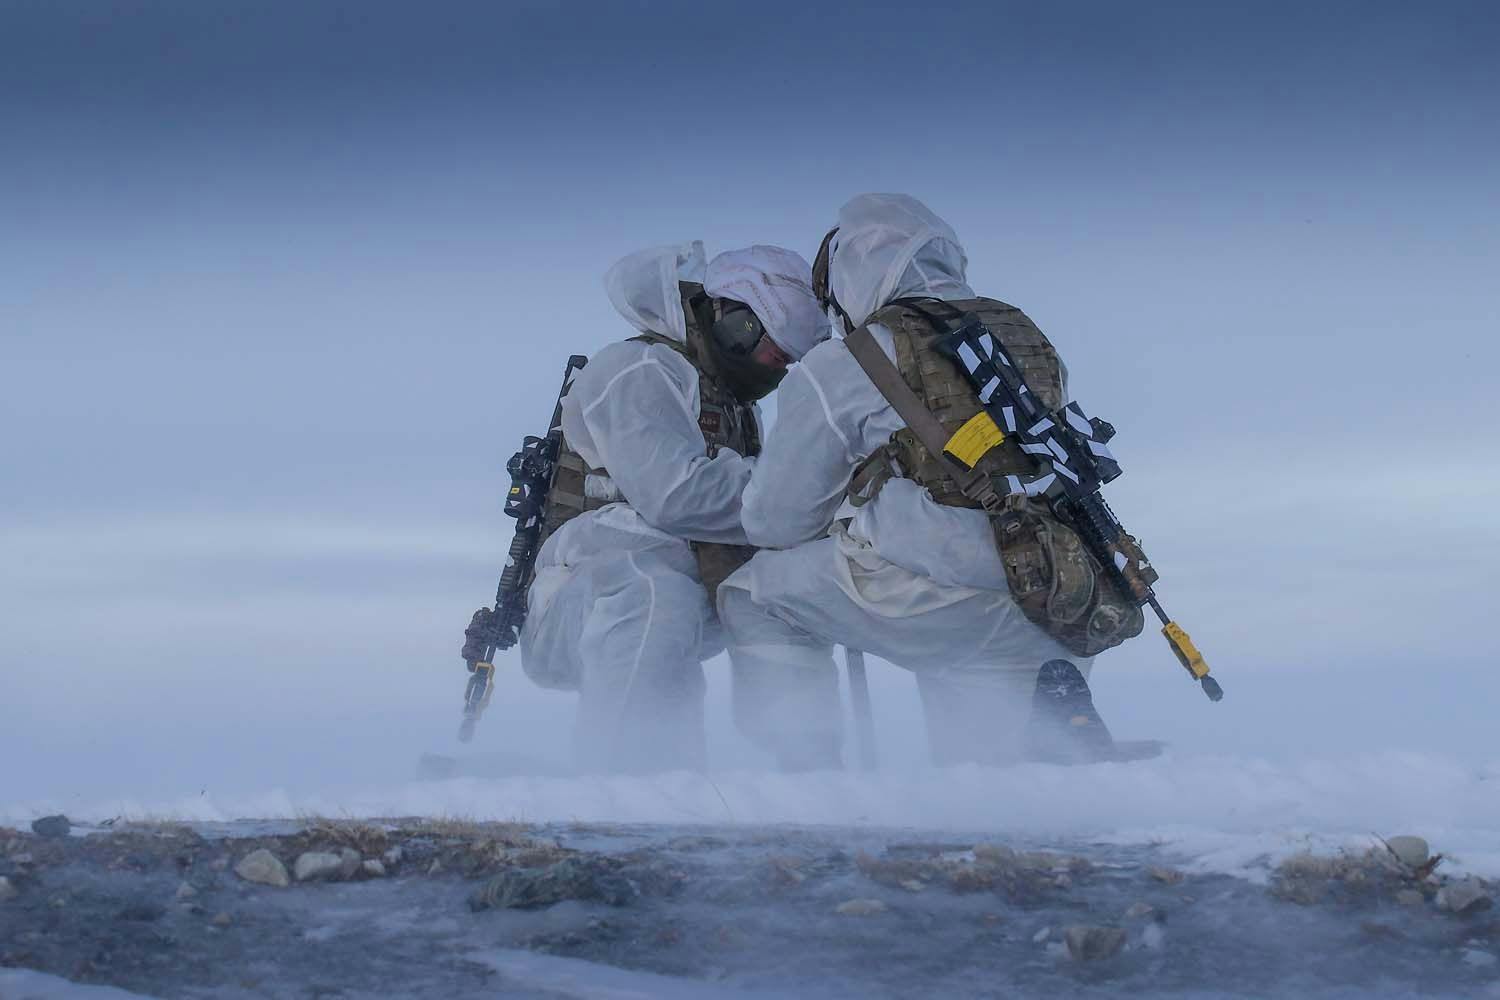 British Commandos take part in daring Arctic parachute jump